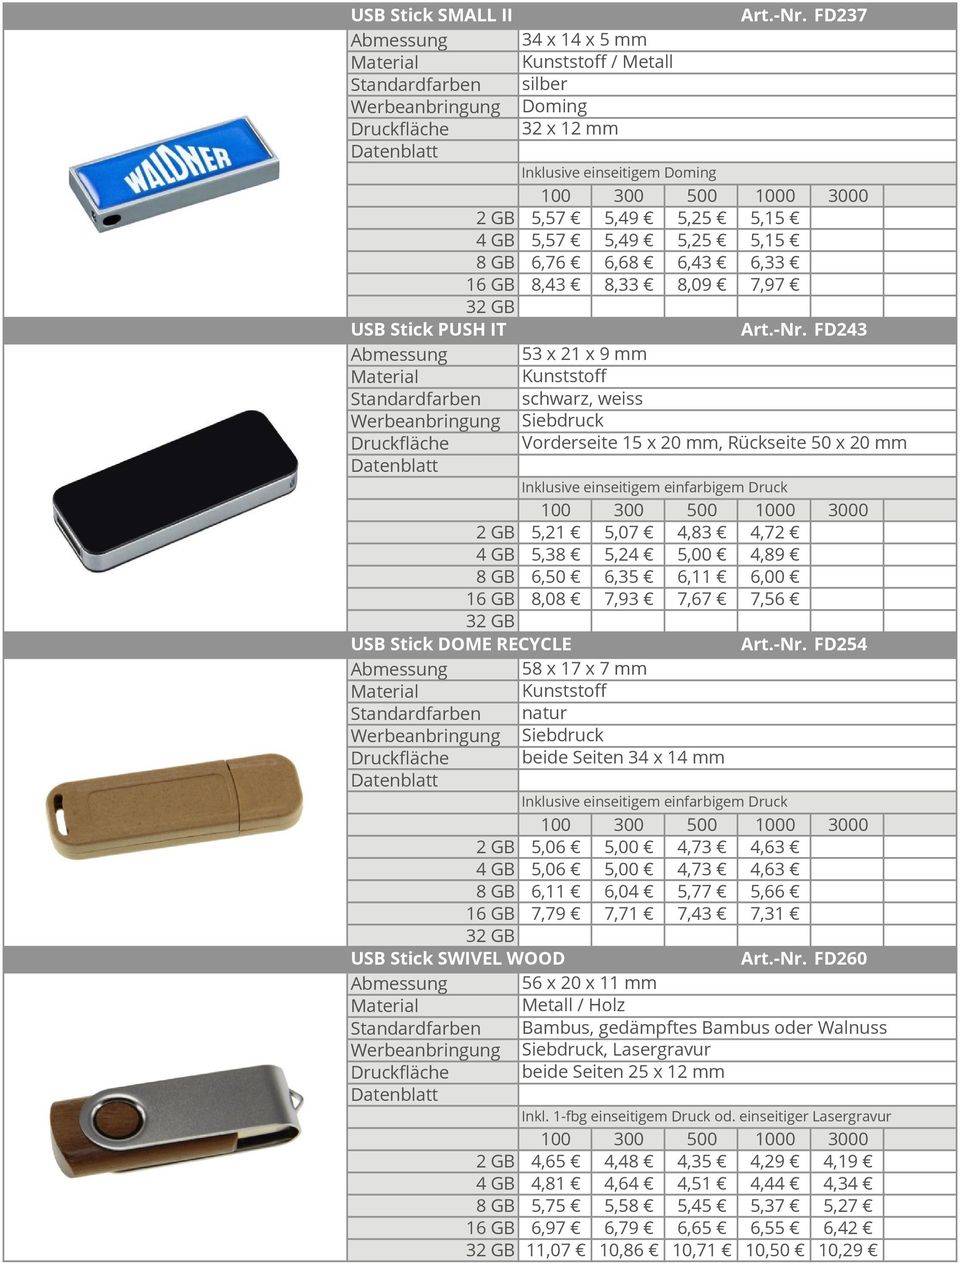 FD243 Inklusive einseitigem einfarbigem Druck 2 GB 5,21 5,07 4,83 4,72 4 GB 5,38 5,24 5,00 4,89 8 GB 6,50 6,35 6,11 6,00 16 GB 8,08 7,93 7,67 7,56 USB Stick DOME RECYCLE Art.-Nr.